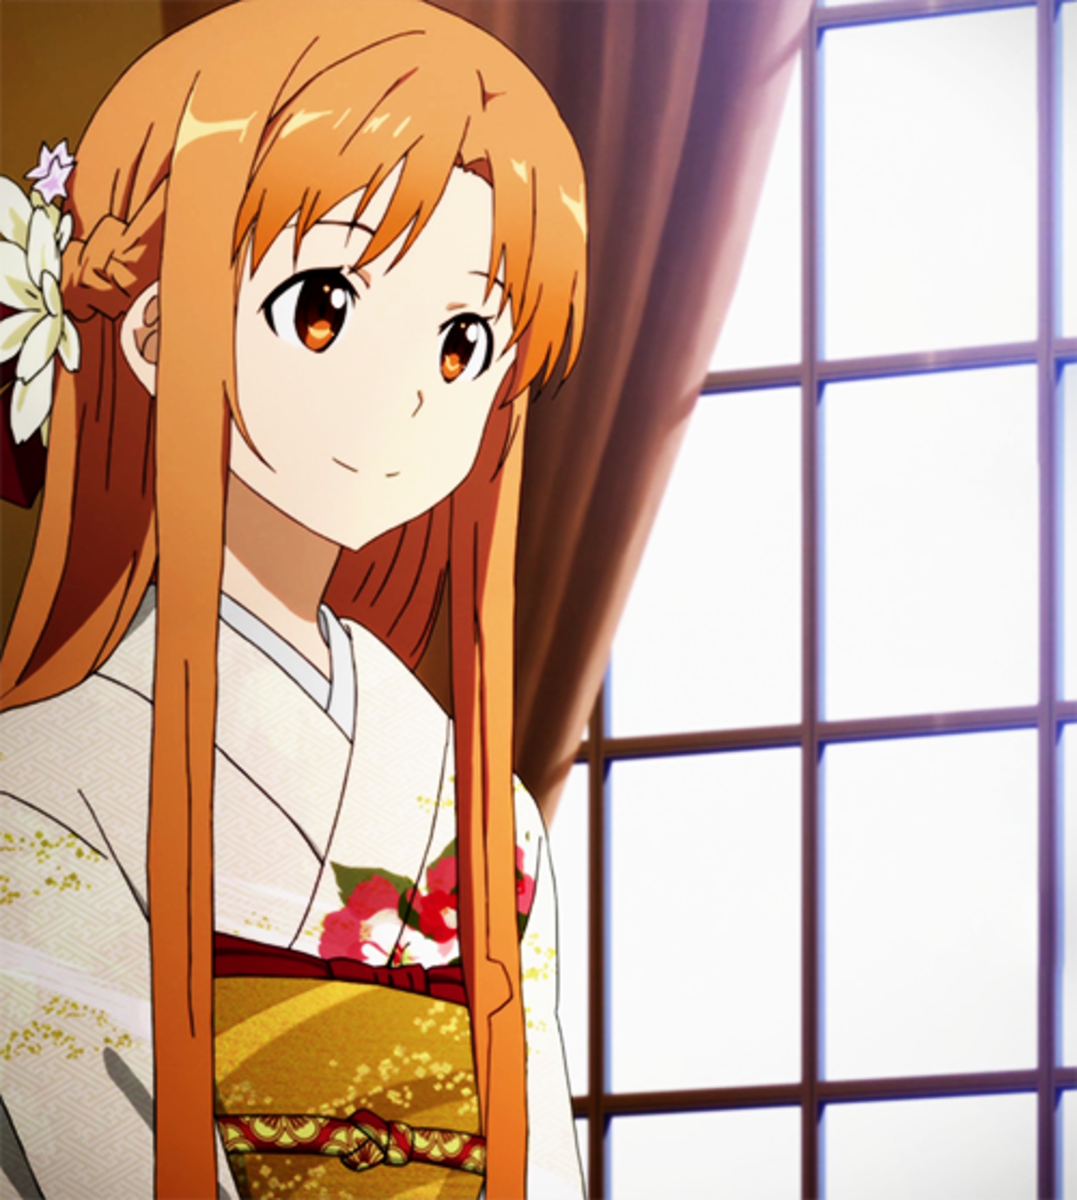 Bishoujo: The Most Beautiful Female Anime Characters Ever | ReelRundown